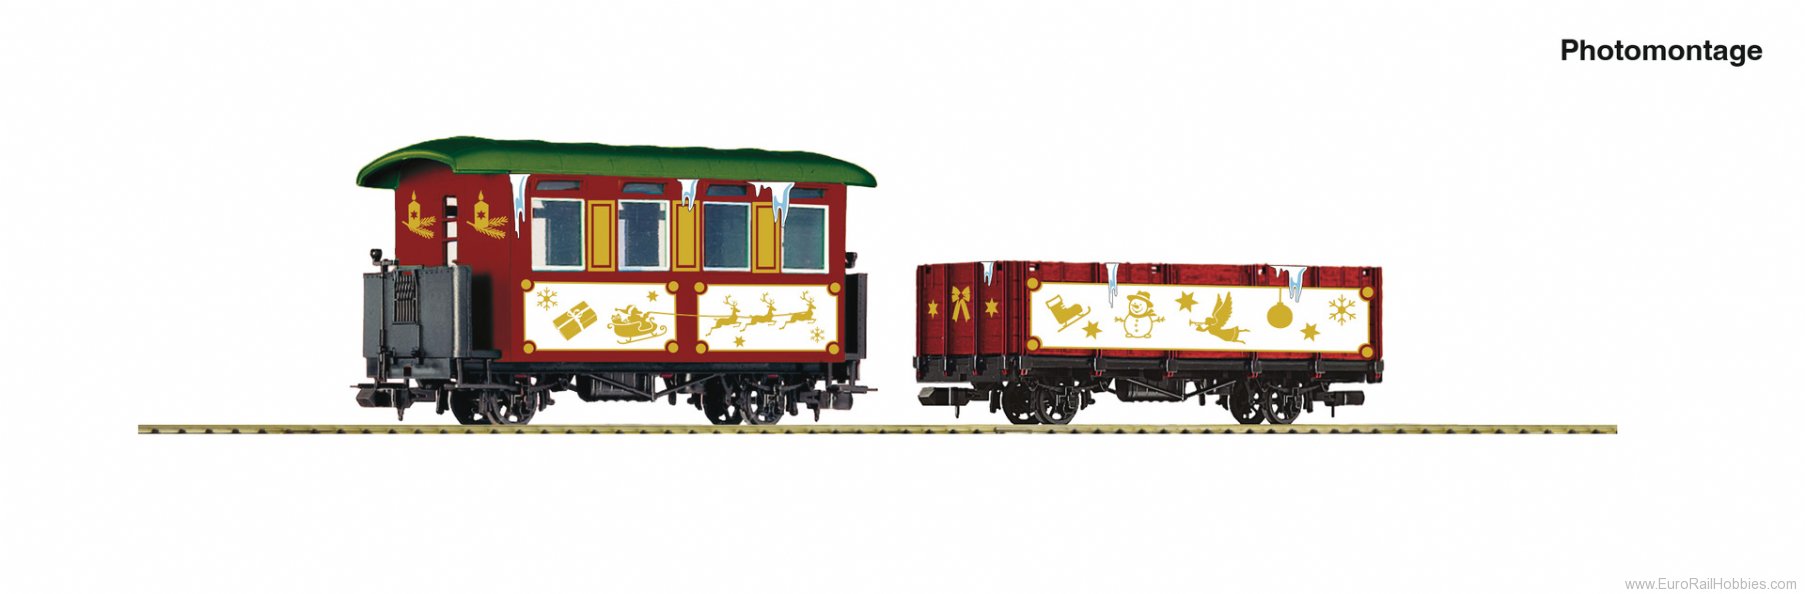 Roco 6230001 2 Piece Christmas Train Extension Set